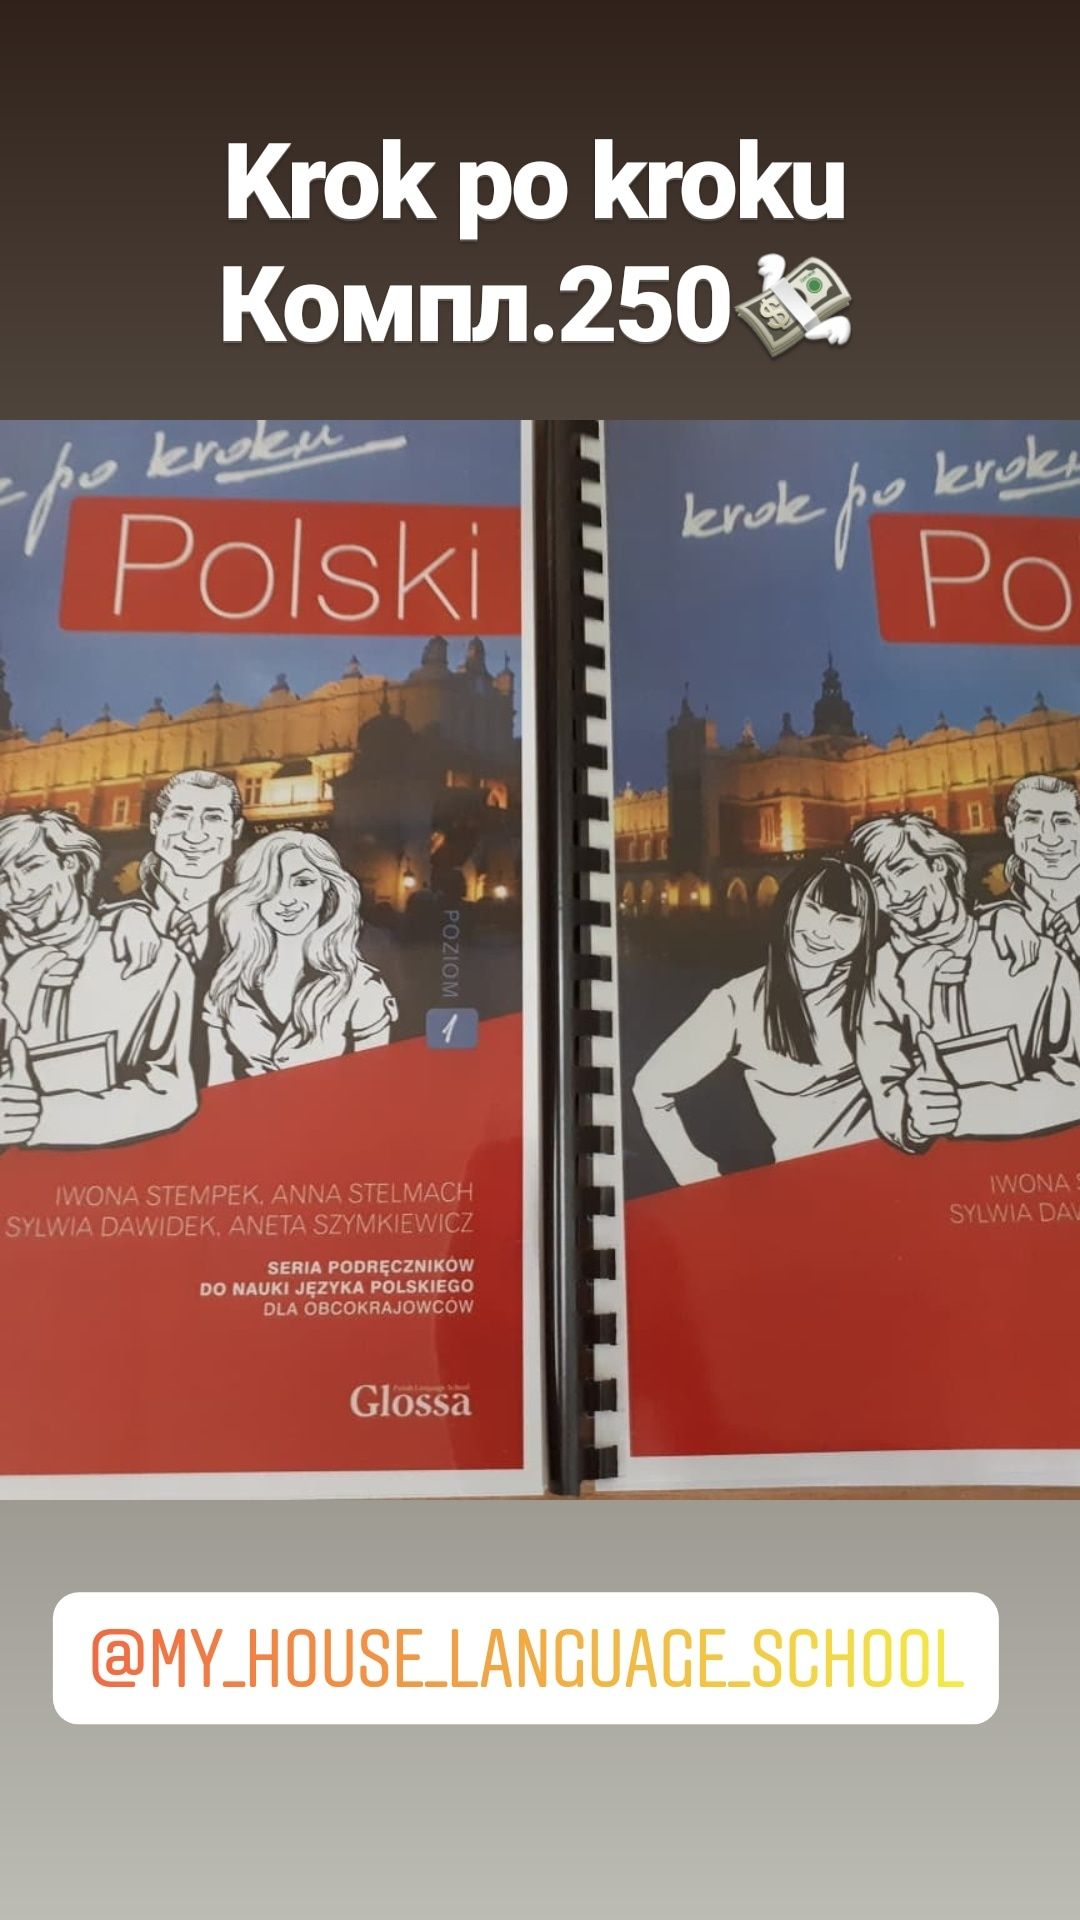 Krok po kroku, hurra junior polska czytaj polska bez granic